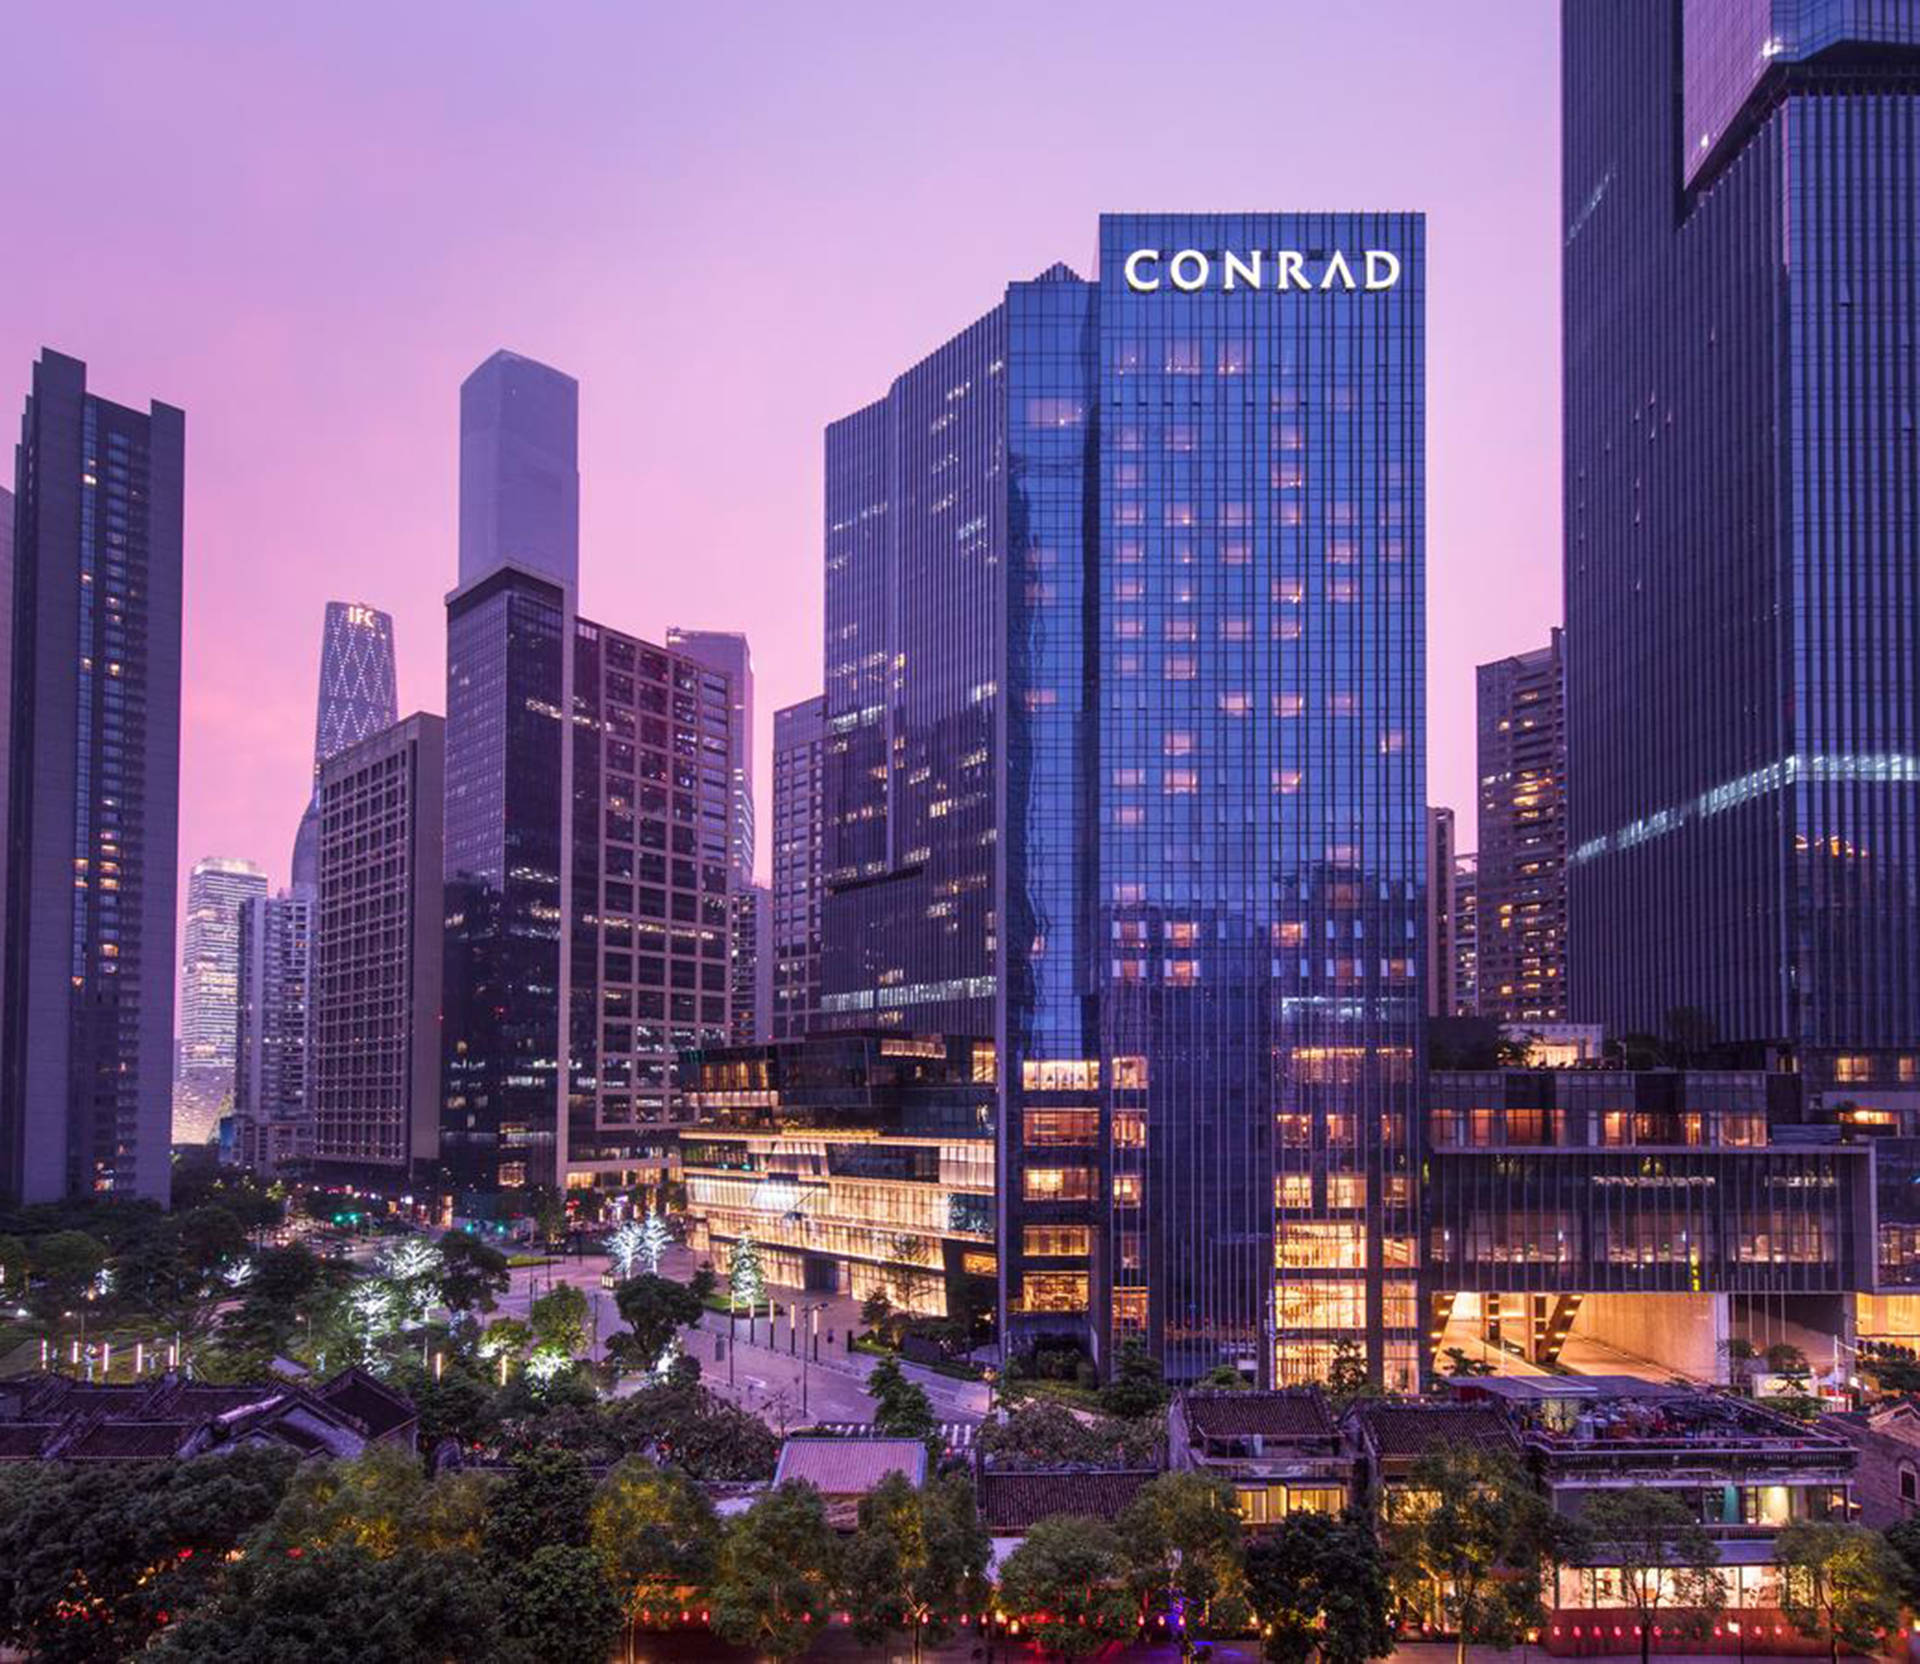 Guangzhou Conrad Hotel Background